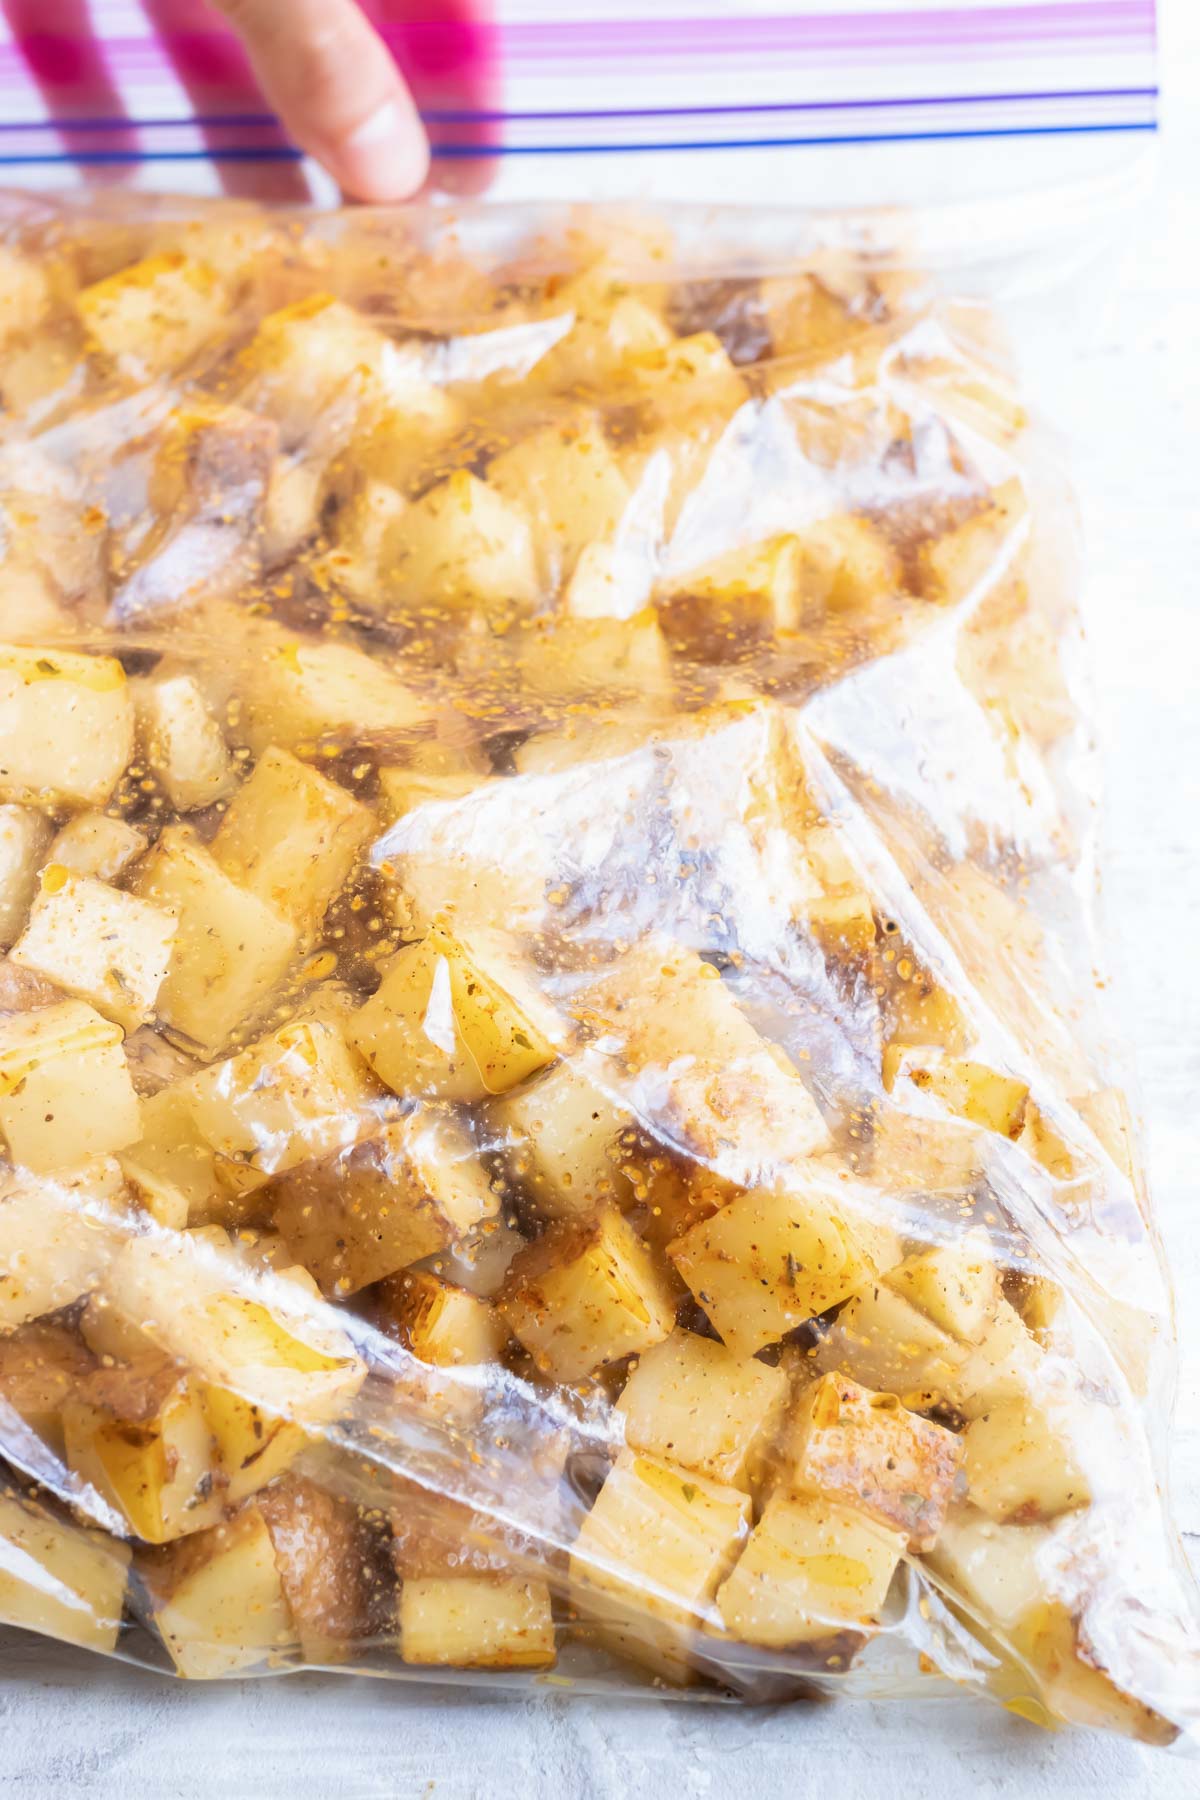 A bag is full of chopped and seasoned potatoes.